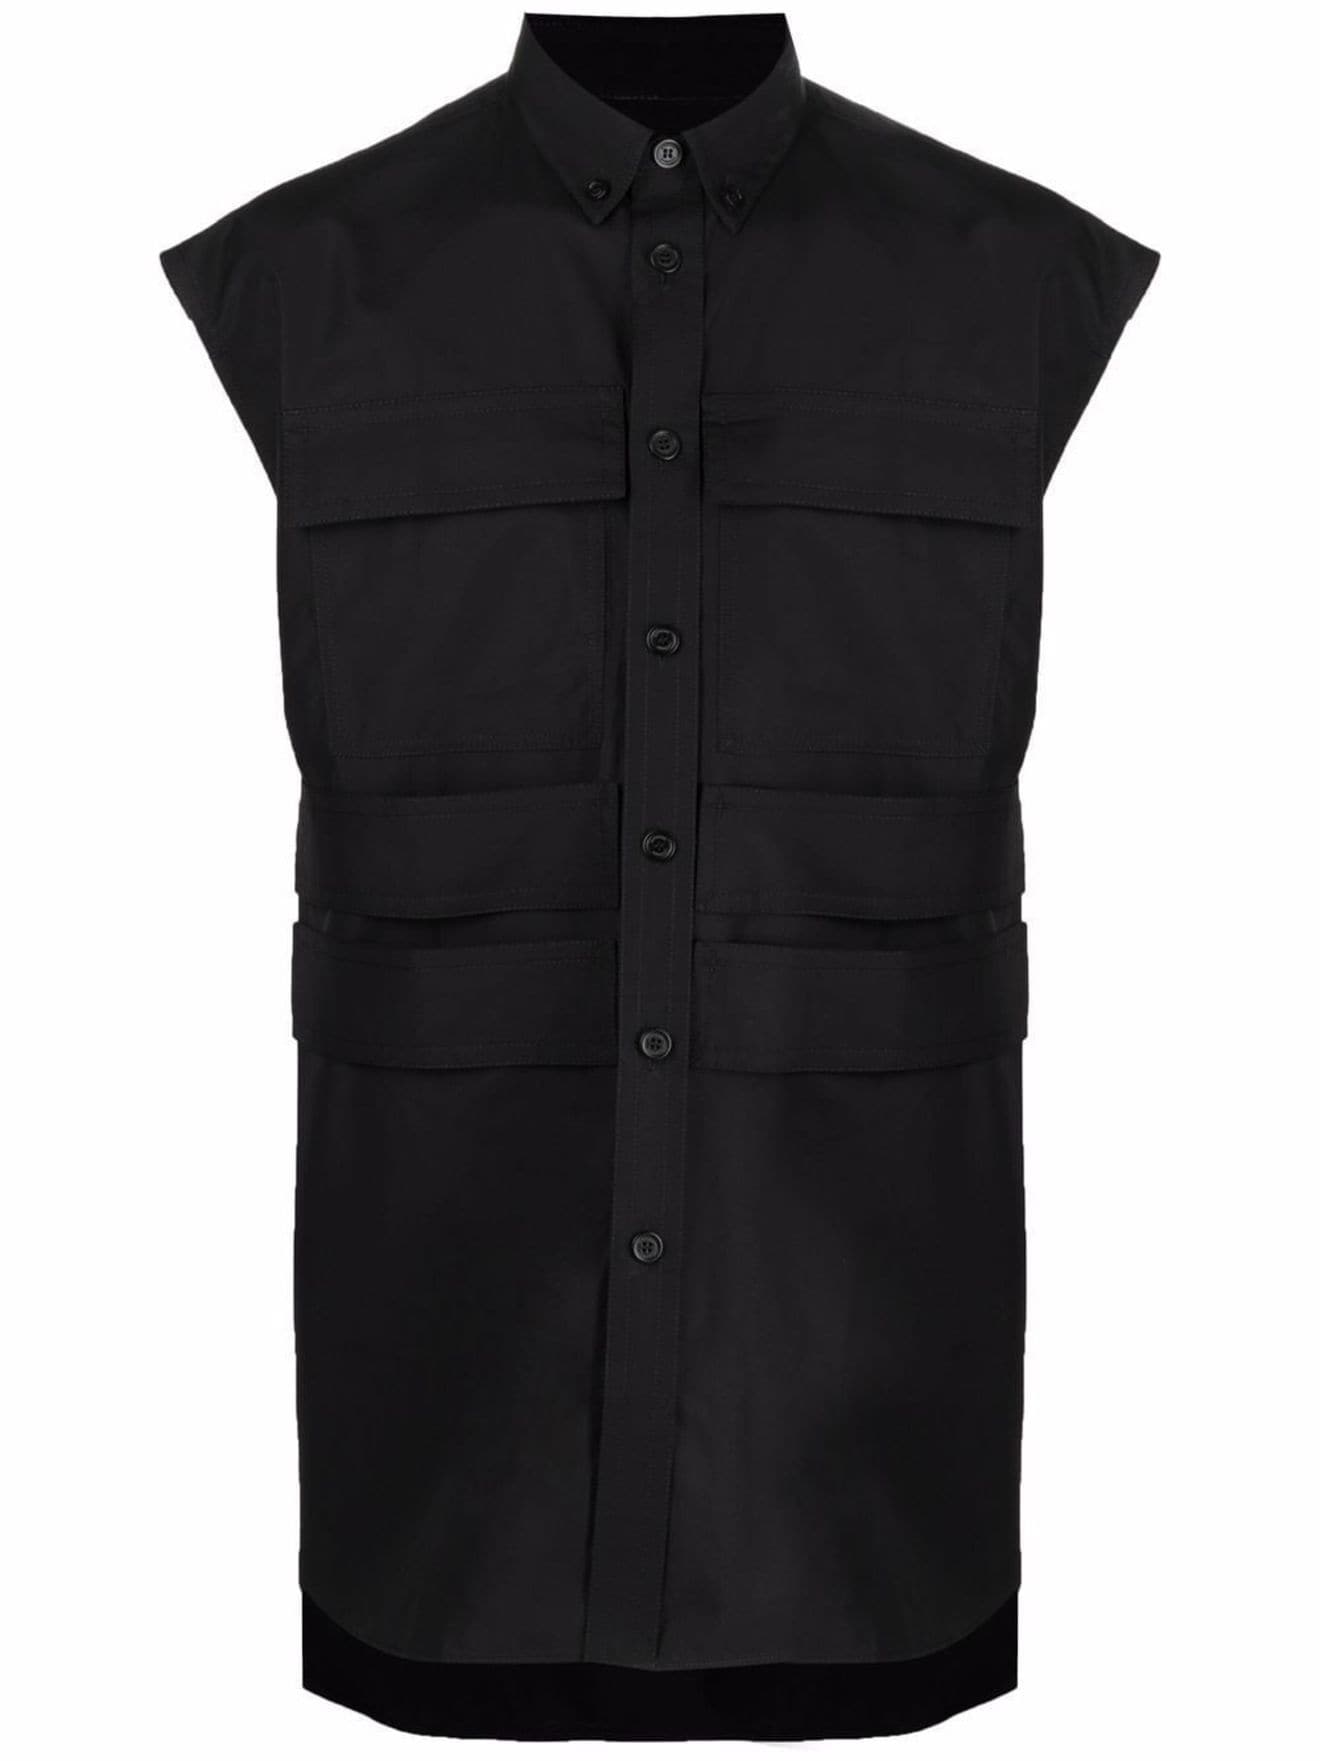 Burberry sleeveless button-down shirt black | MODES